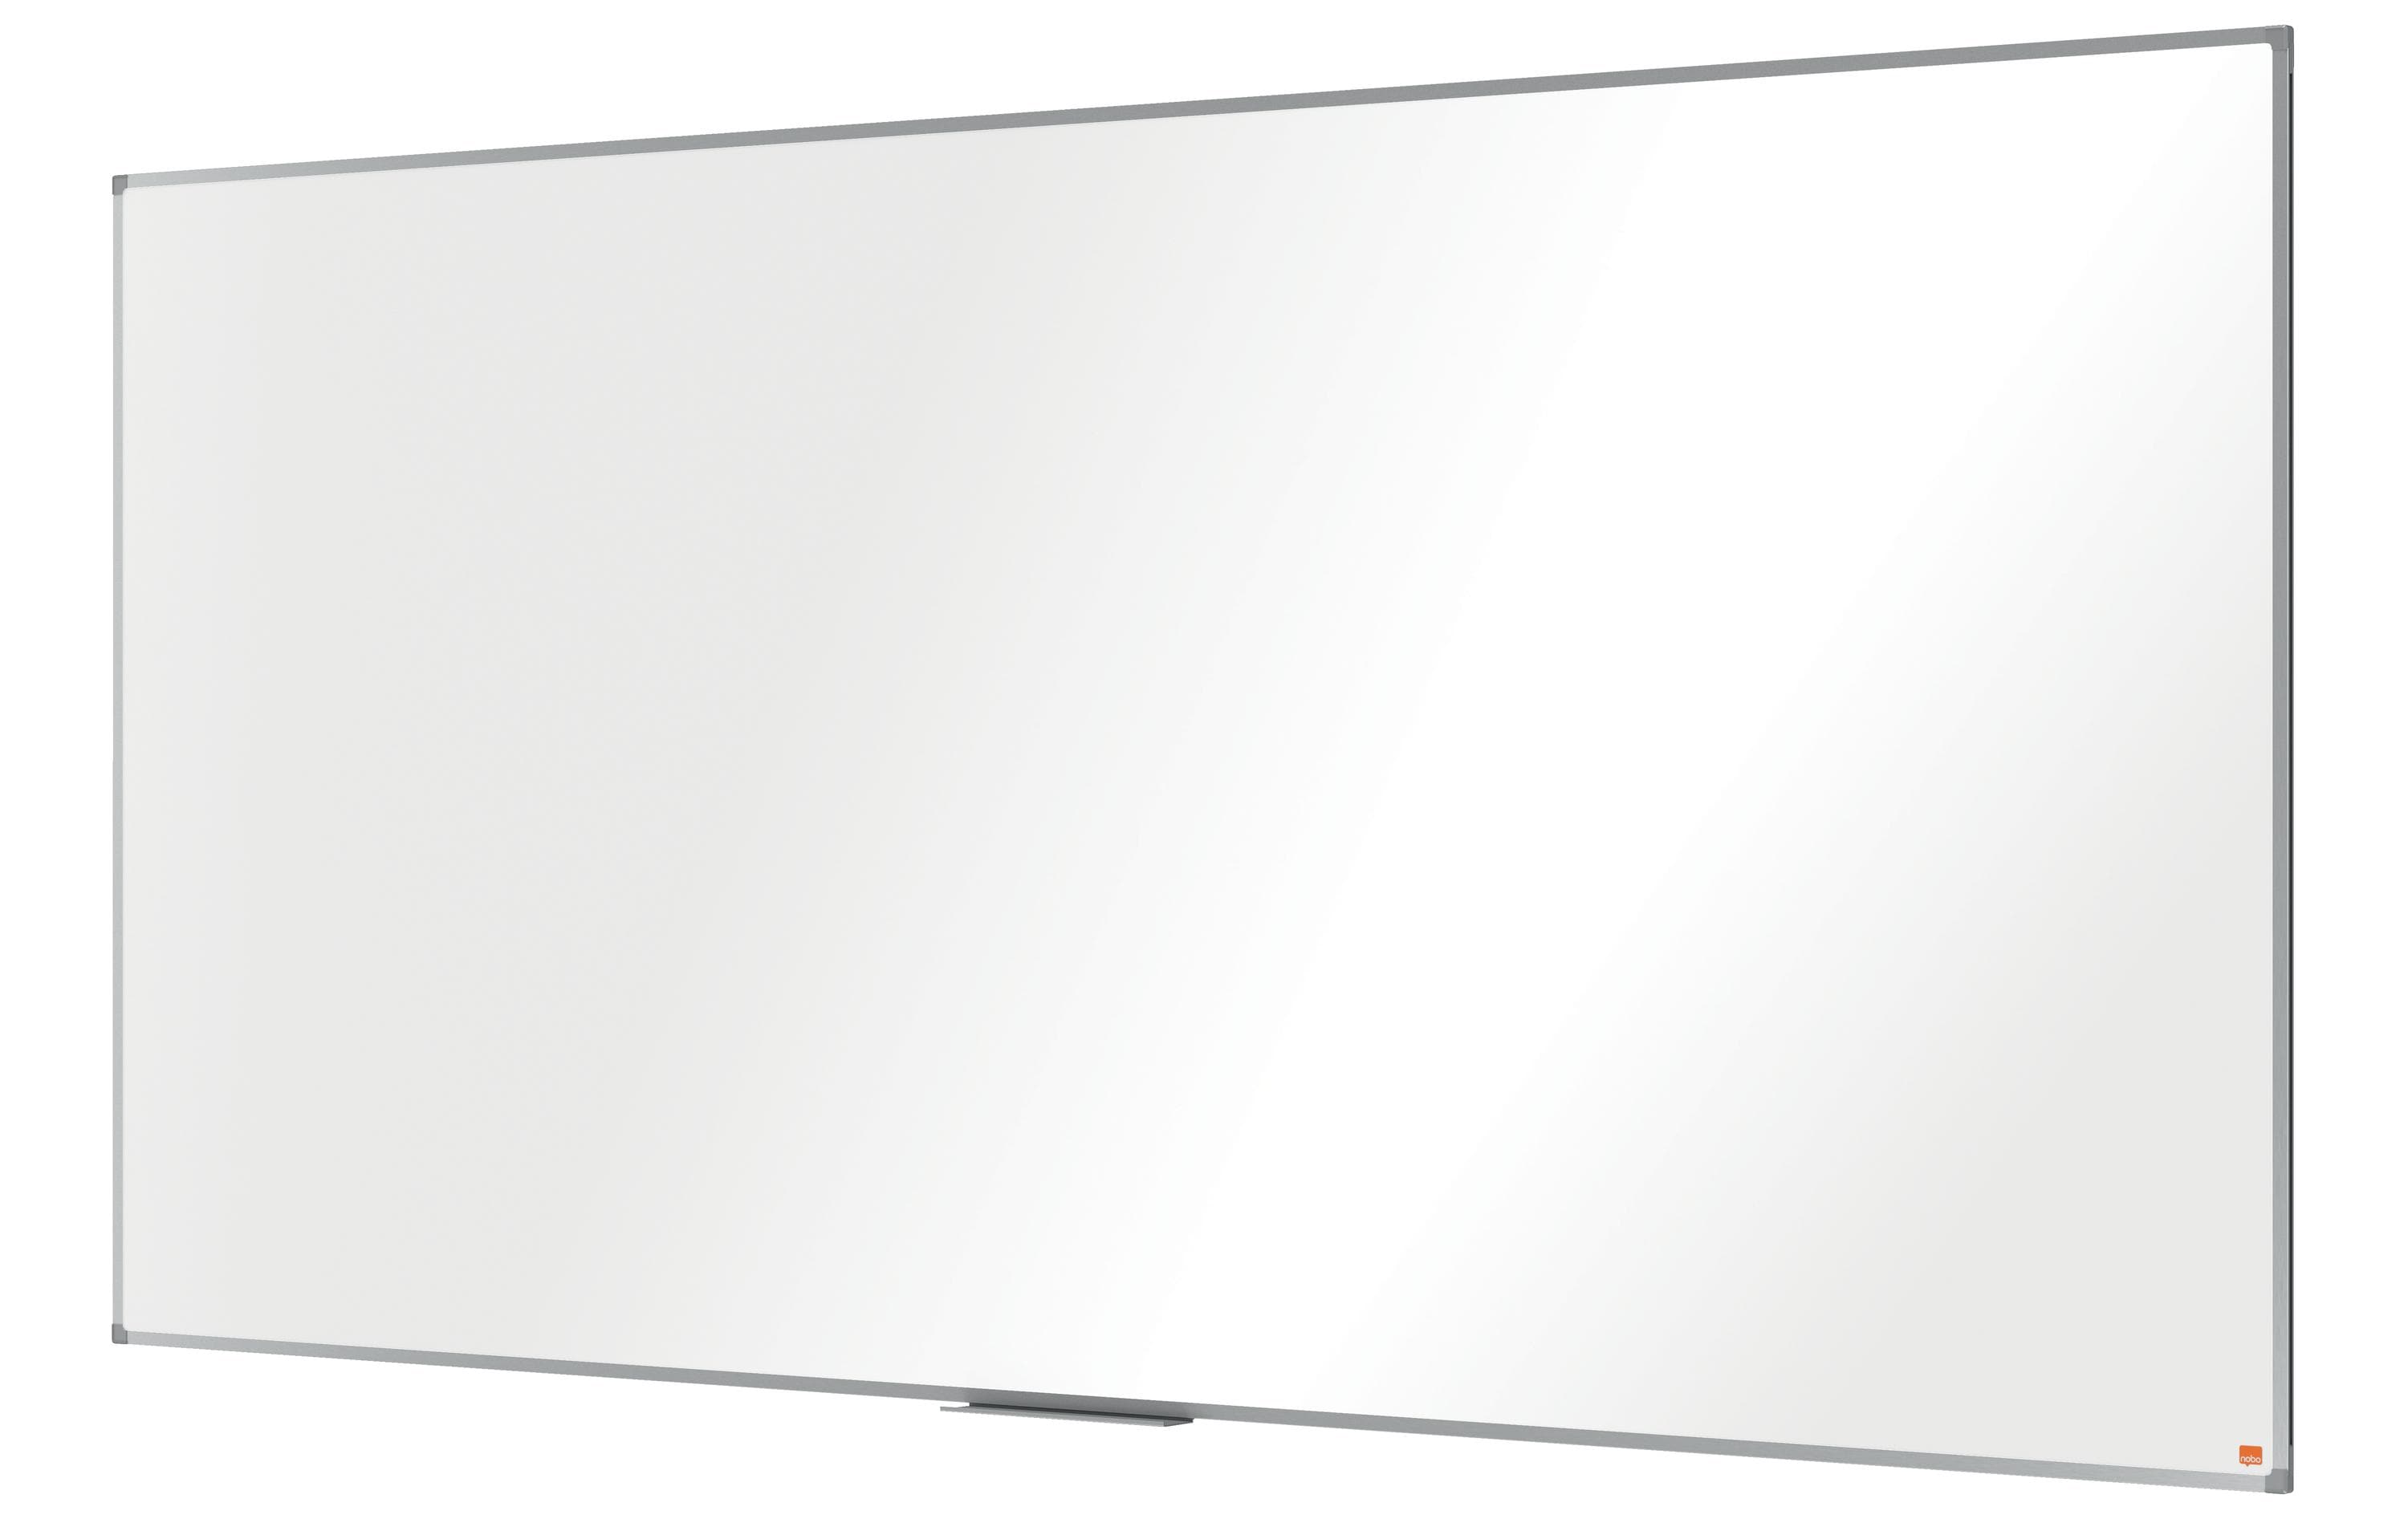 Nobo Whiteboard Essence 120 cm x 240 cm, Weiss